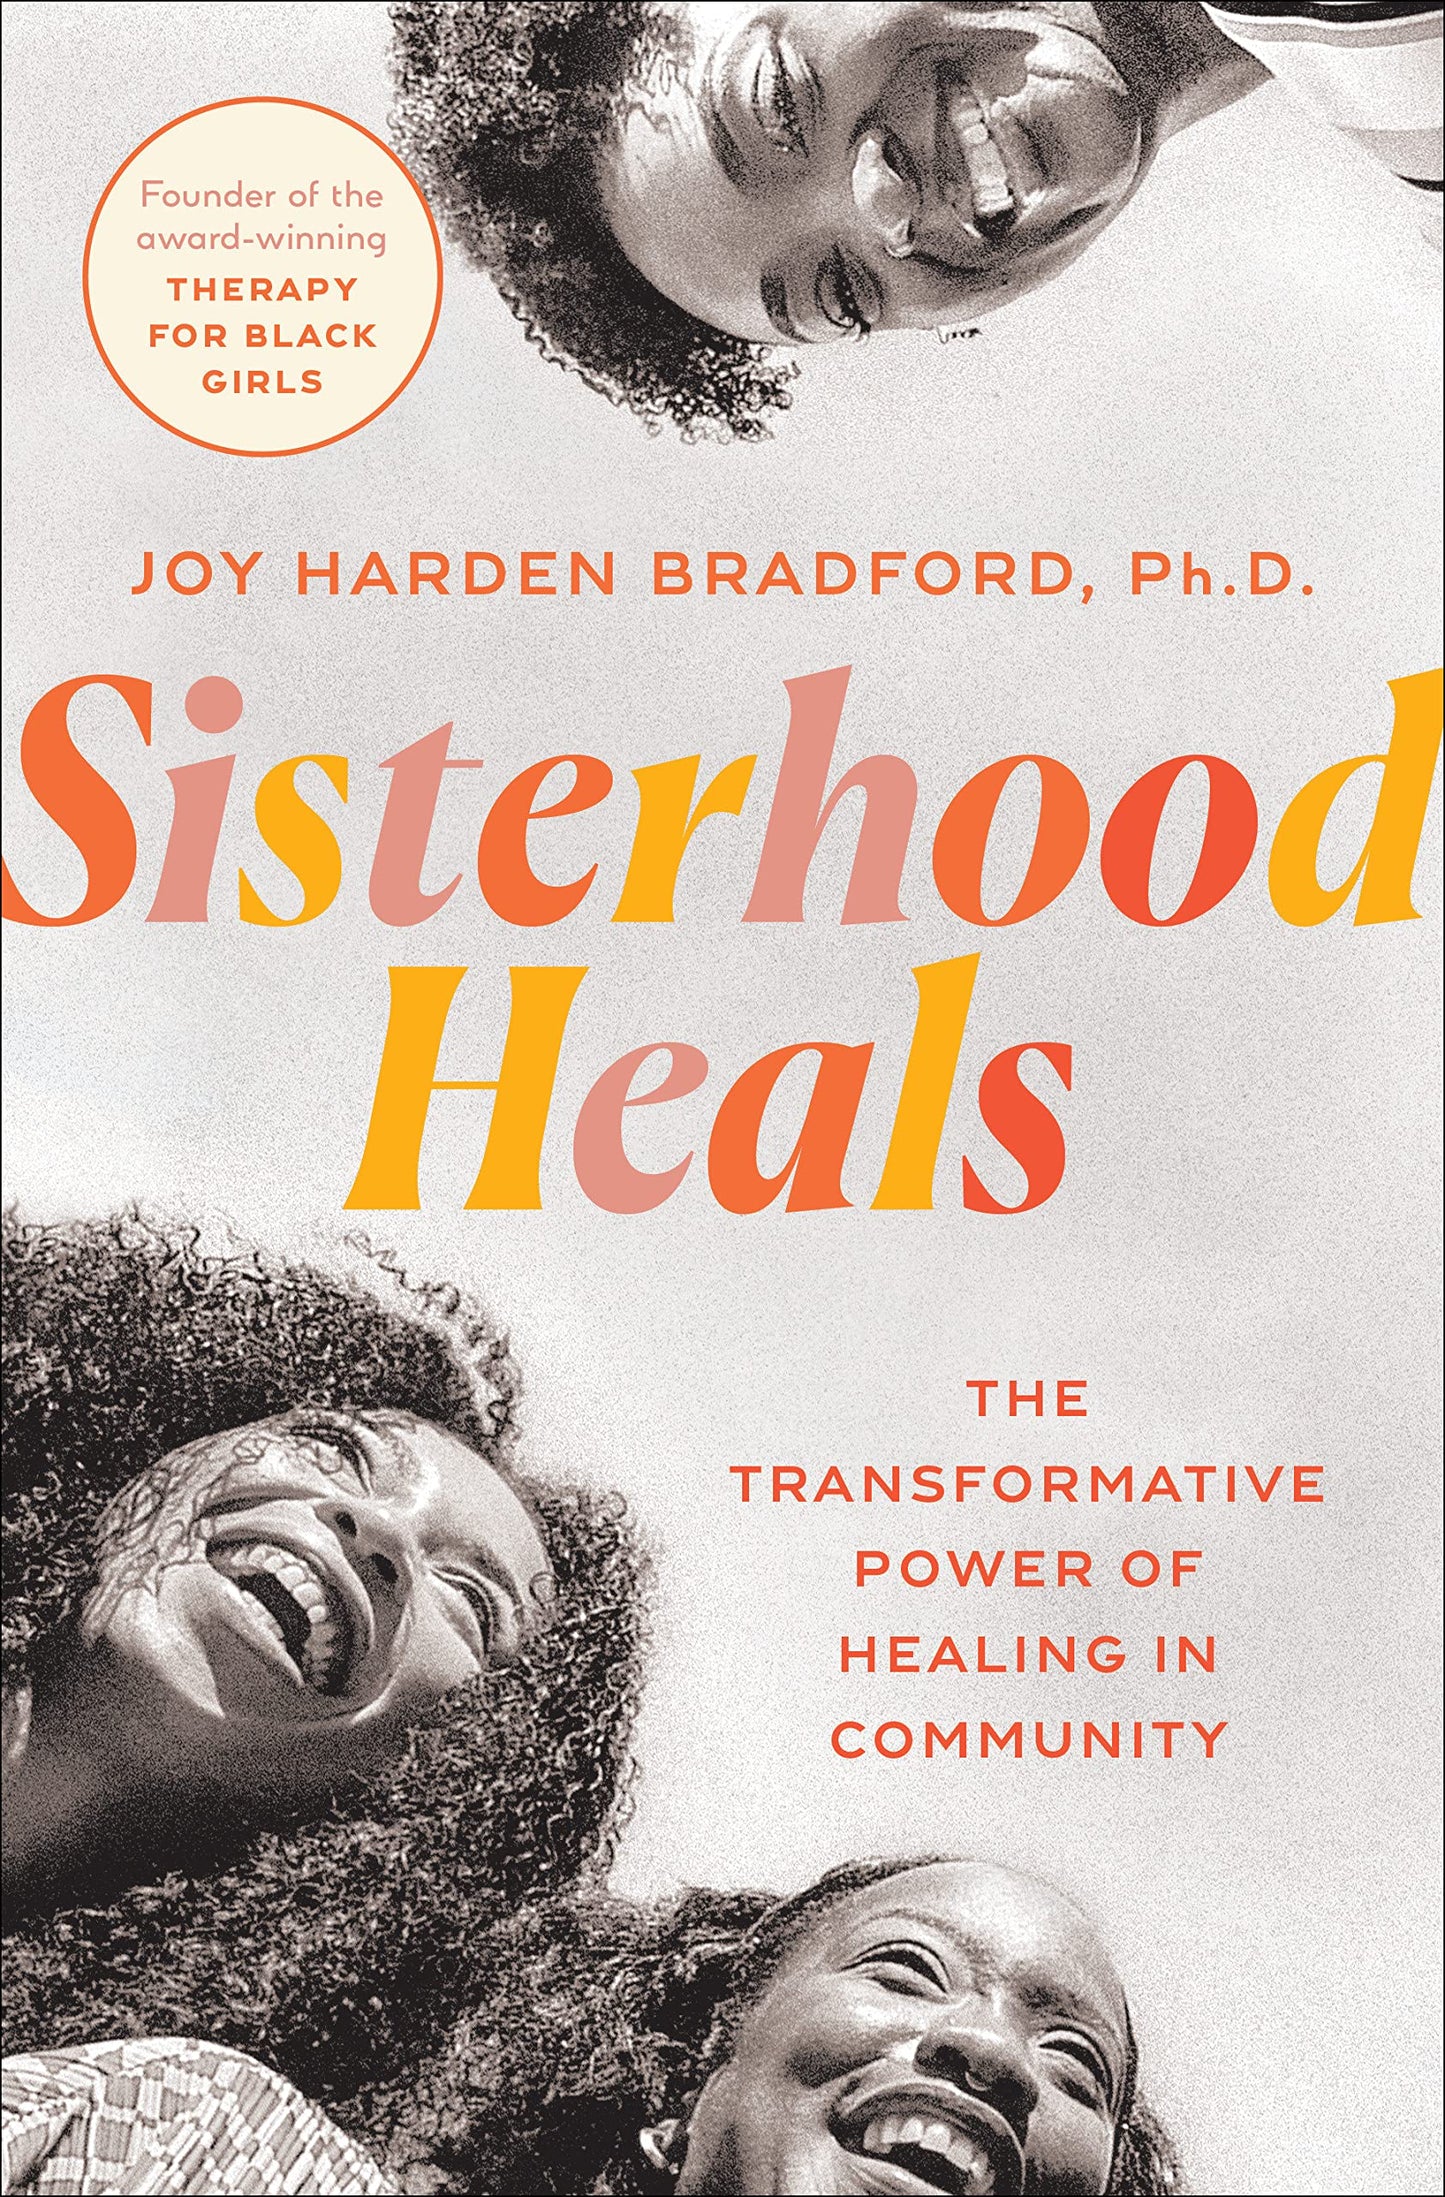 Sisterhood Heals // The Transformative Power of Healing in Community